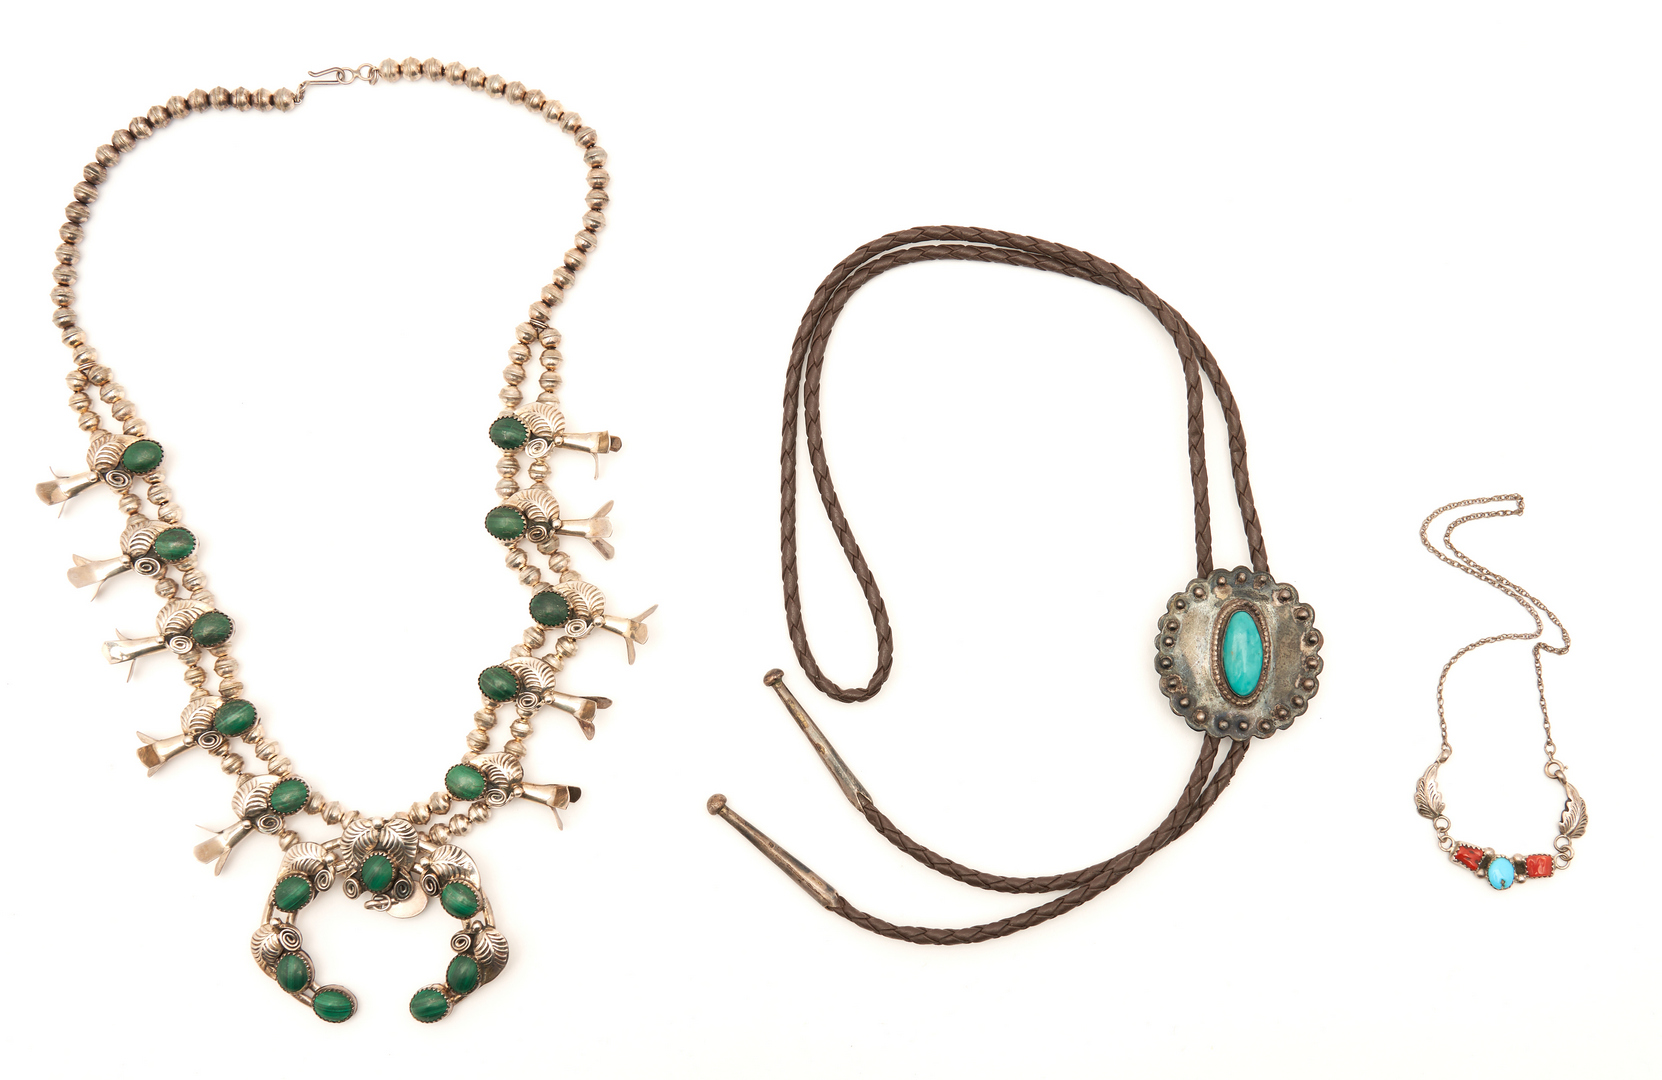 Lot 612: 38 Native American Jewelry Items